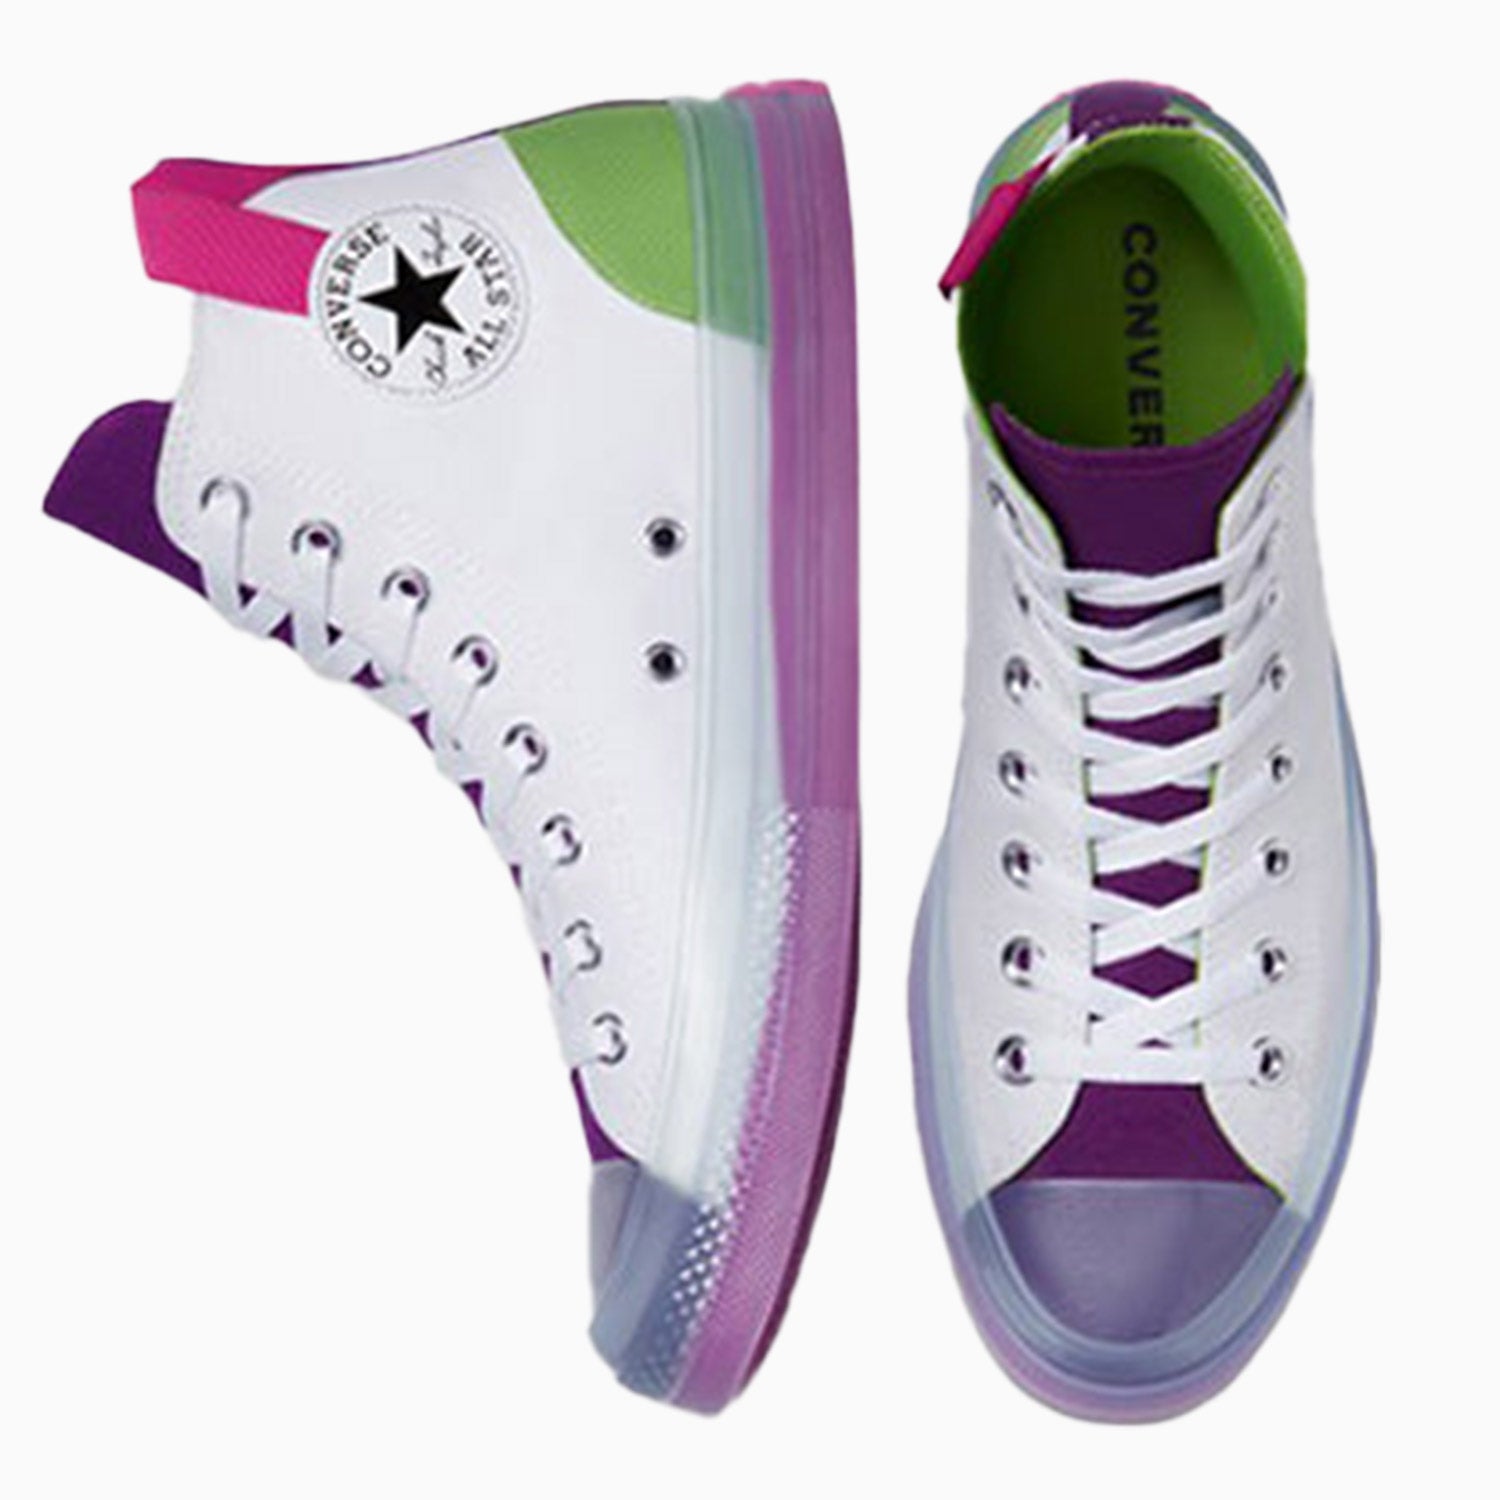 converse-chuck-taylor-all-star-cx-high-dramatic-night-shoes-170833c